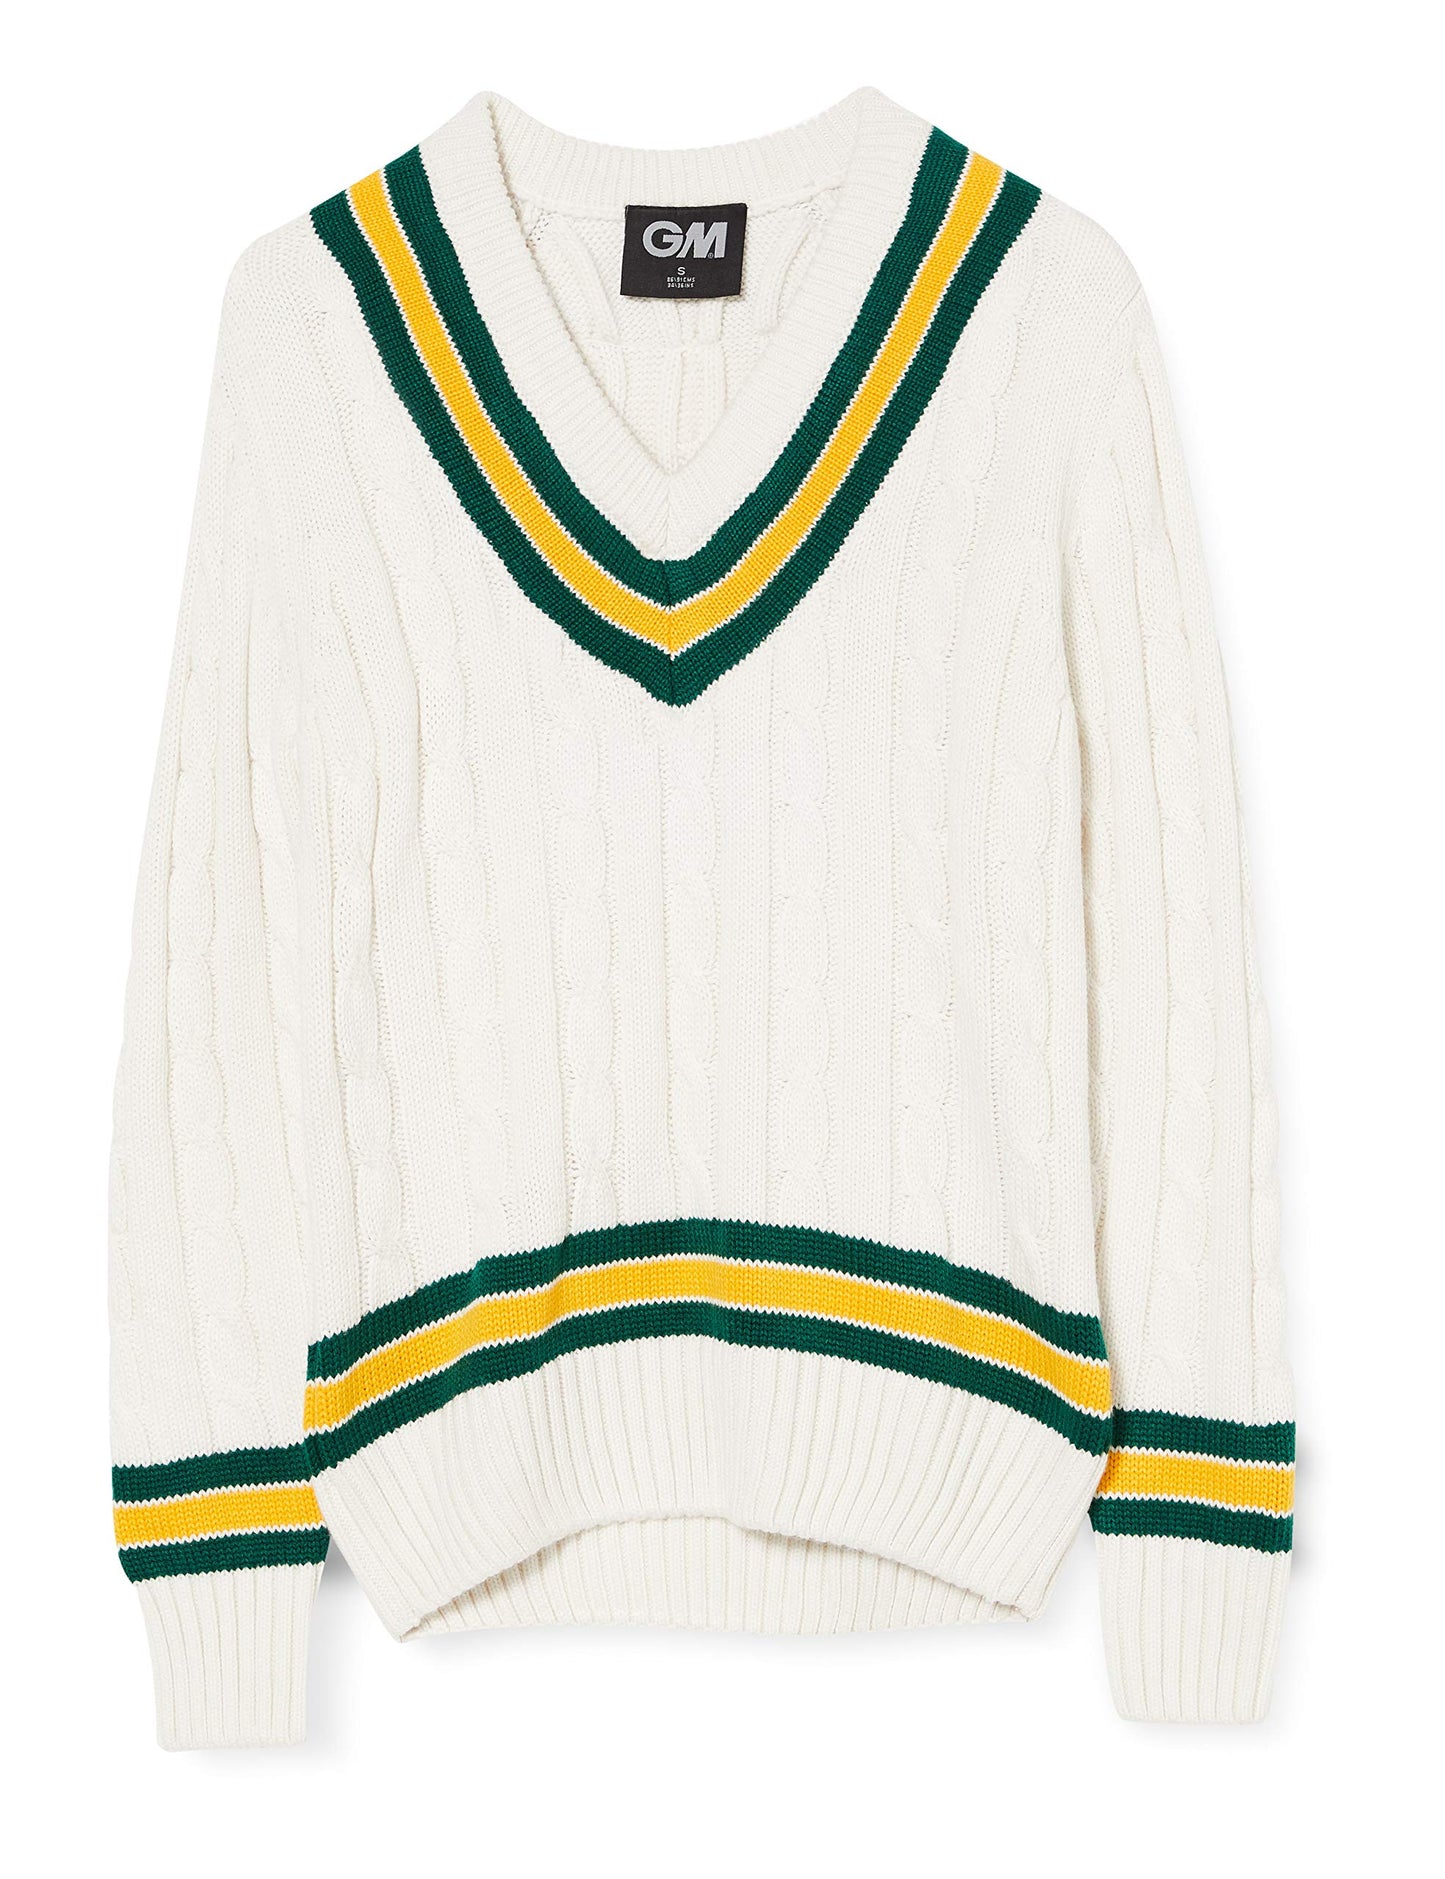 GM Cricket Sweater Green/Yellow Small Boys